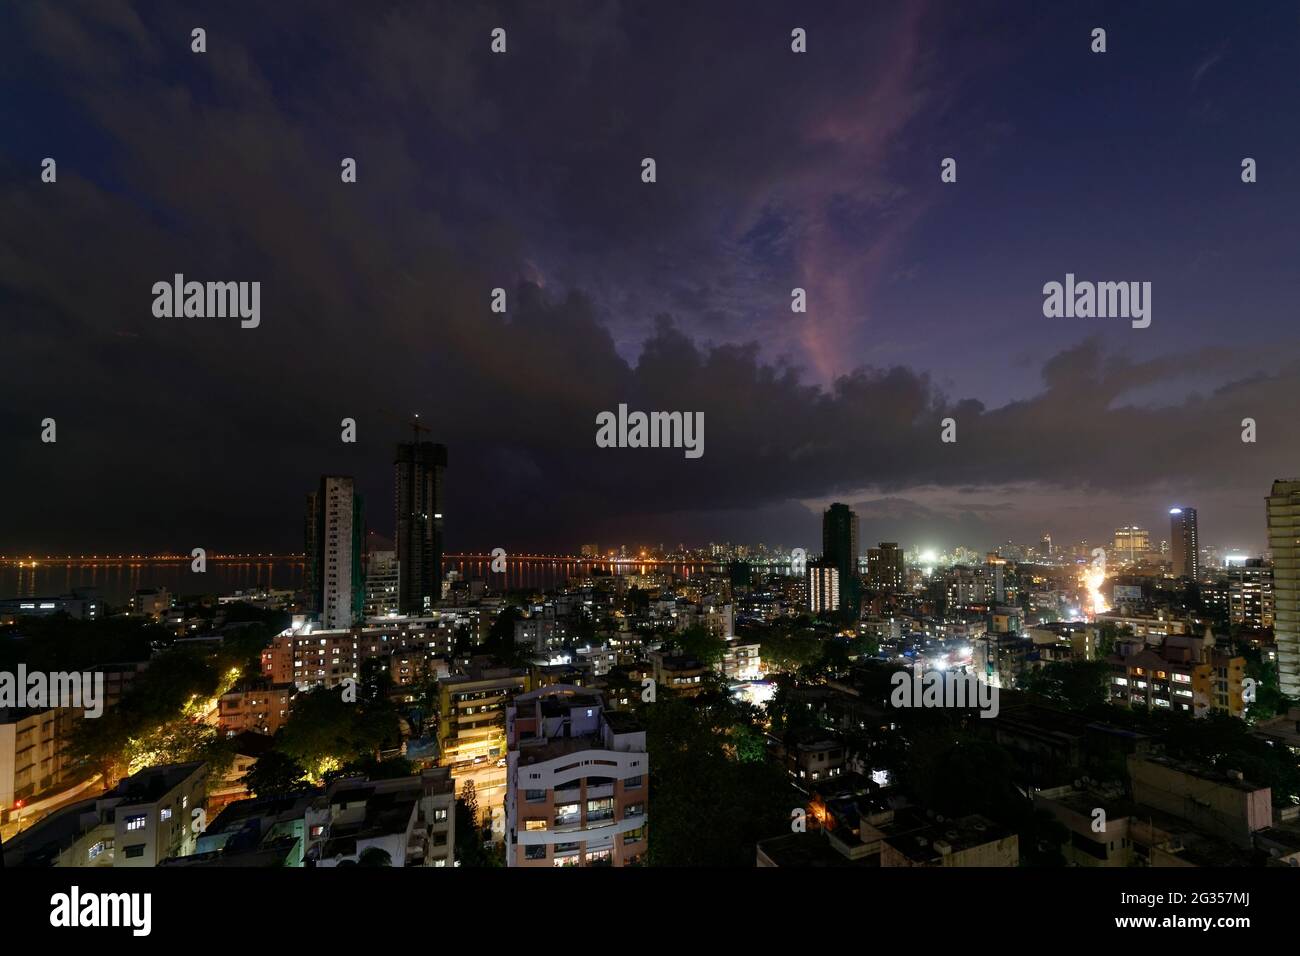 Mumbai Skyline in rainy season showing the skyscrapers and old buildings in cramped space, Mumbai, Maharashtra, India. Stock Photo